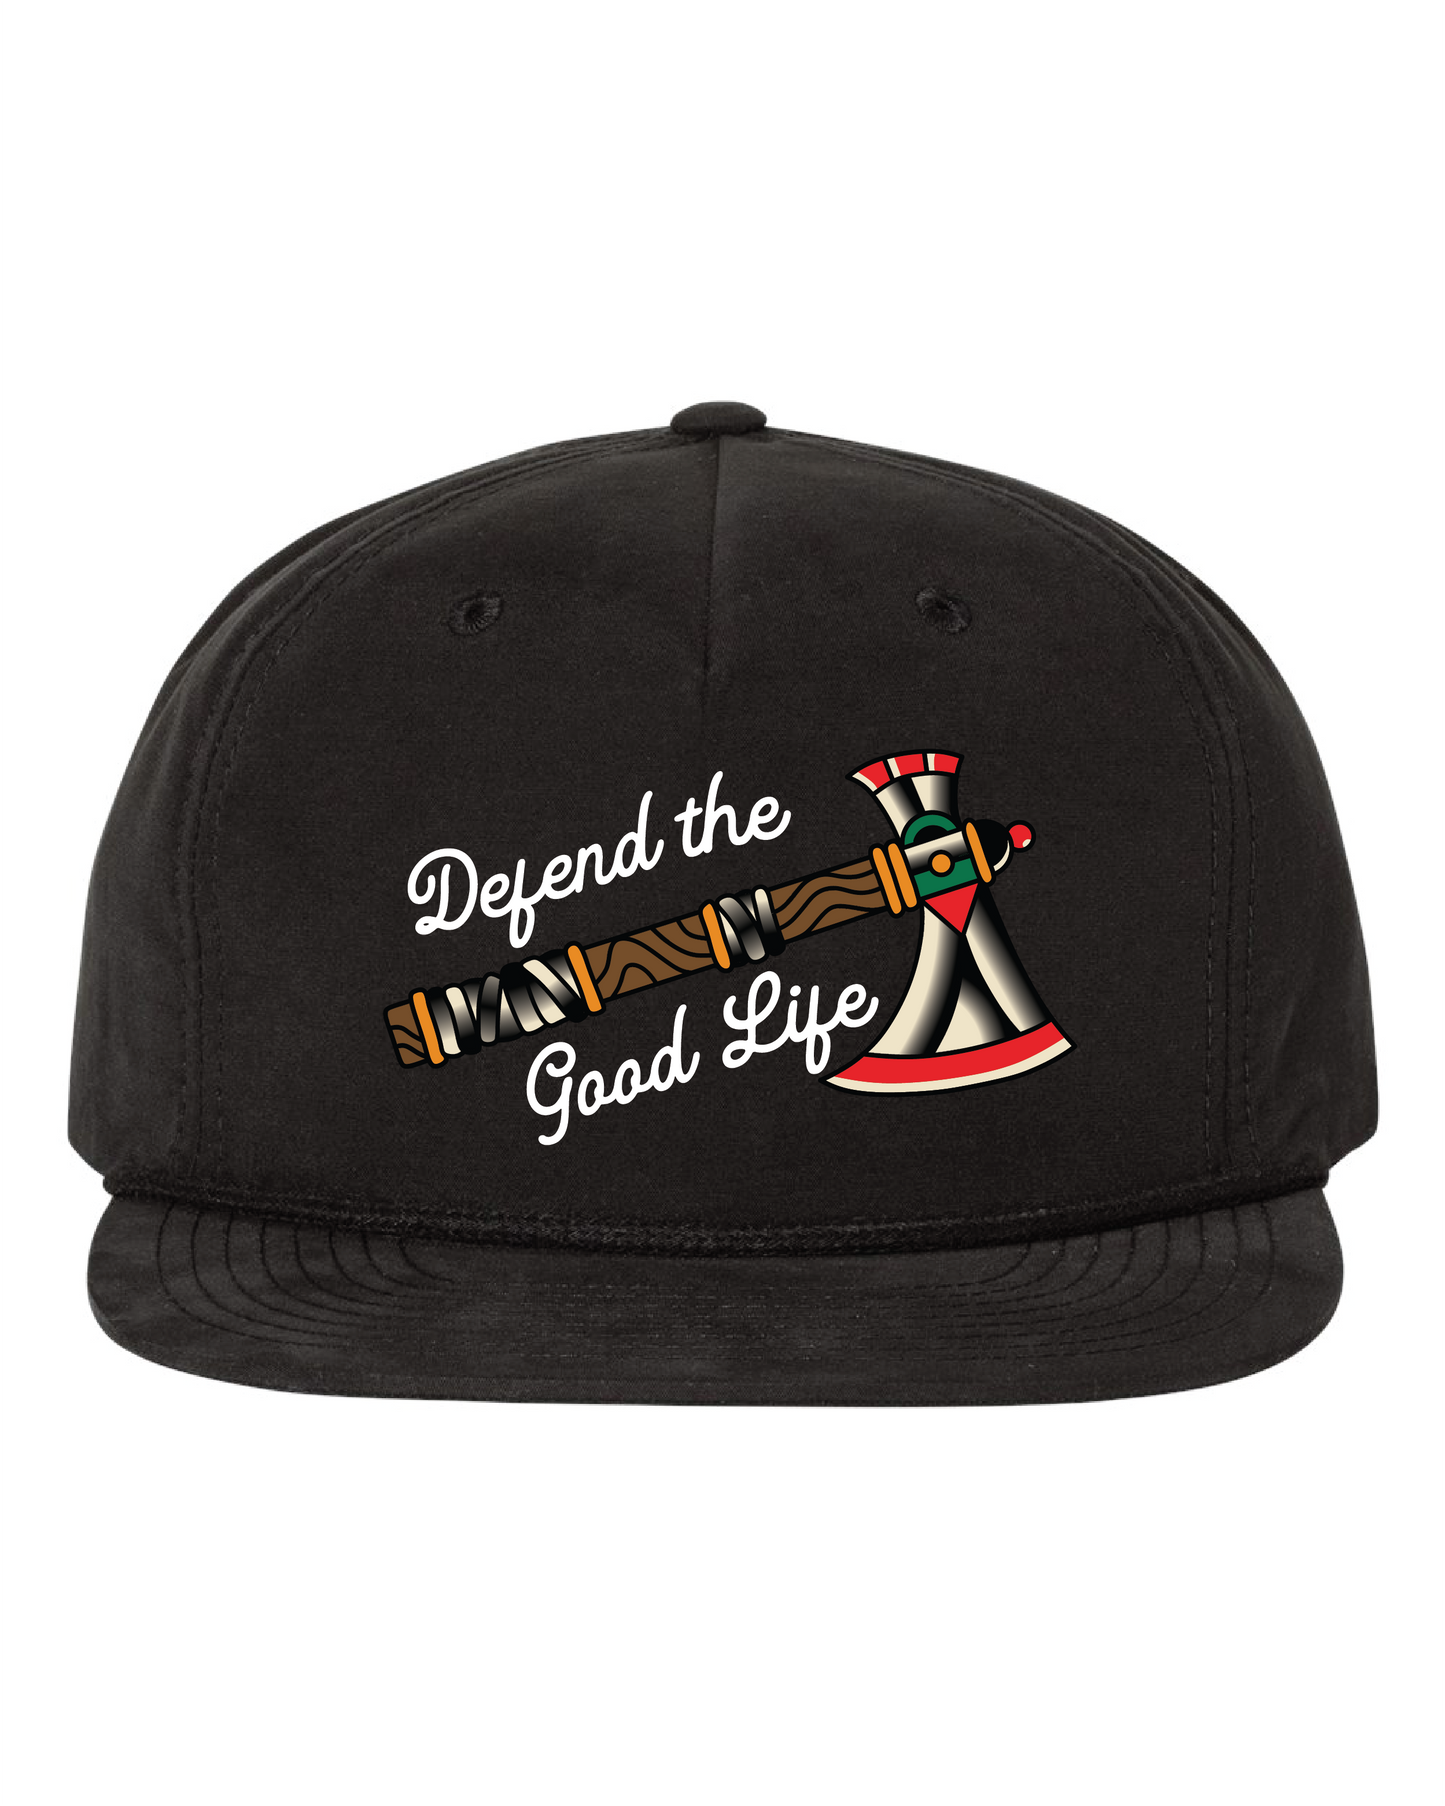 Defend the Good Life Hatchet - Rope Hat